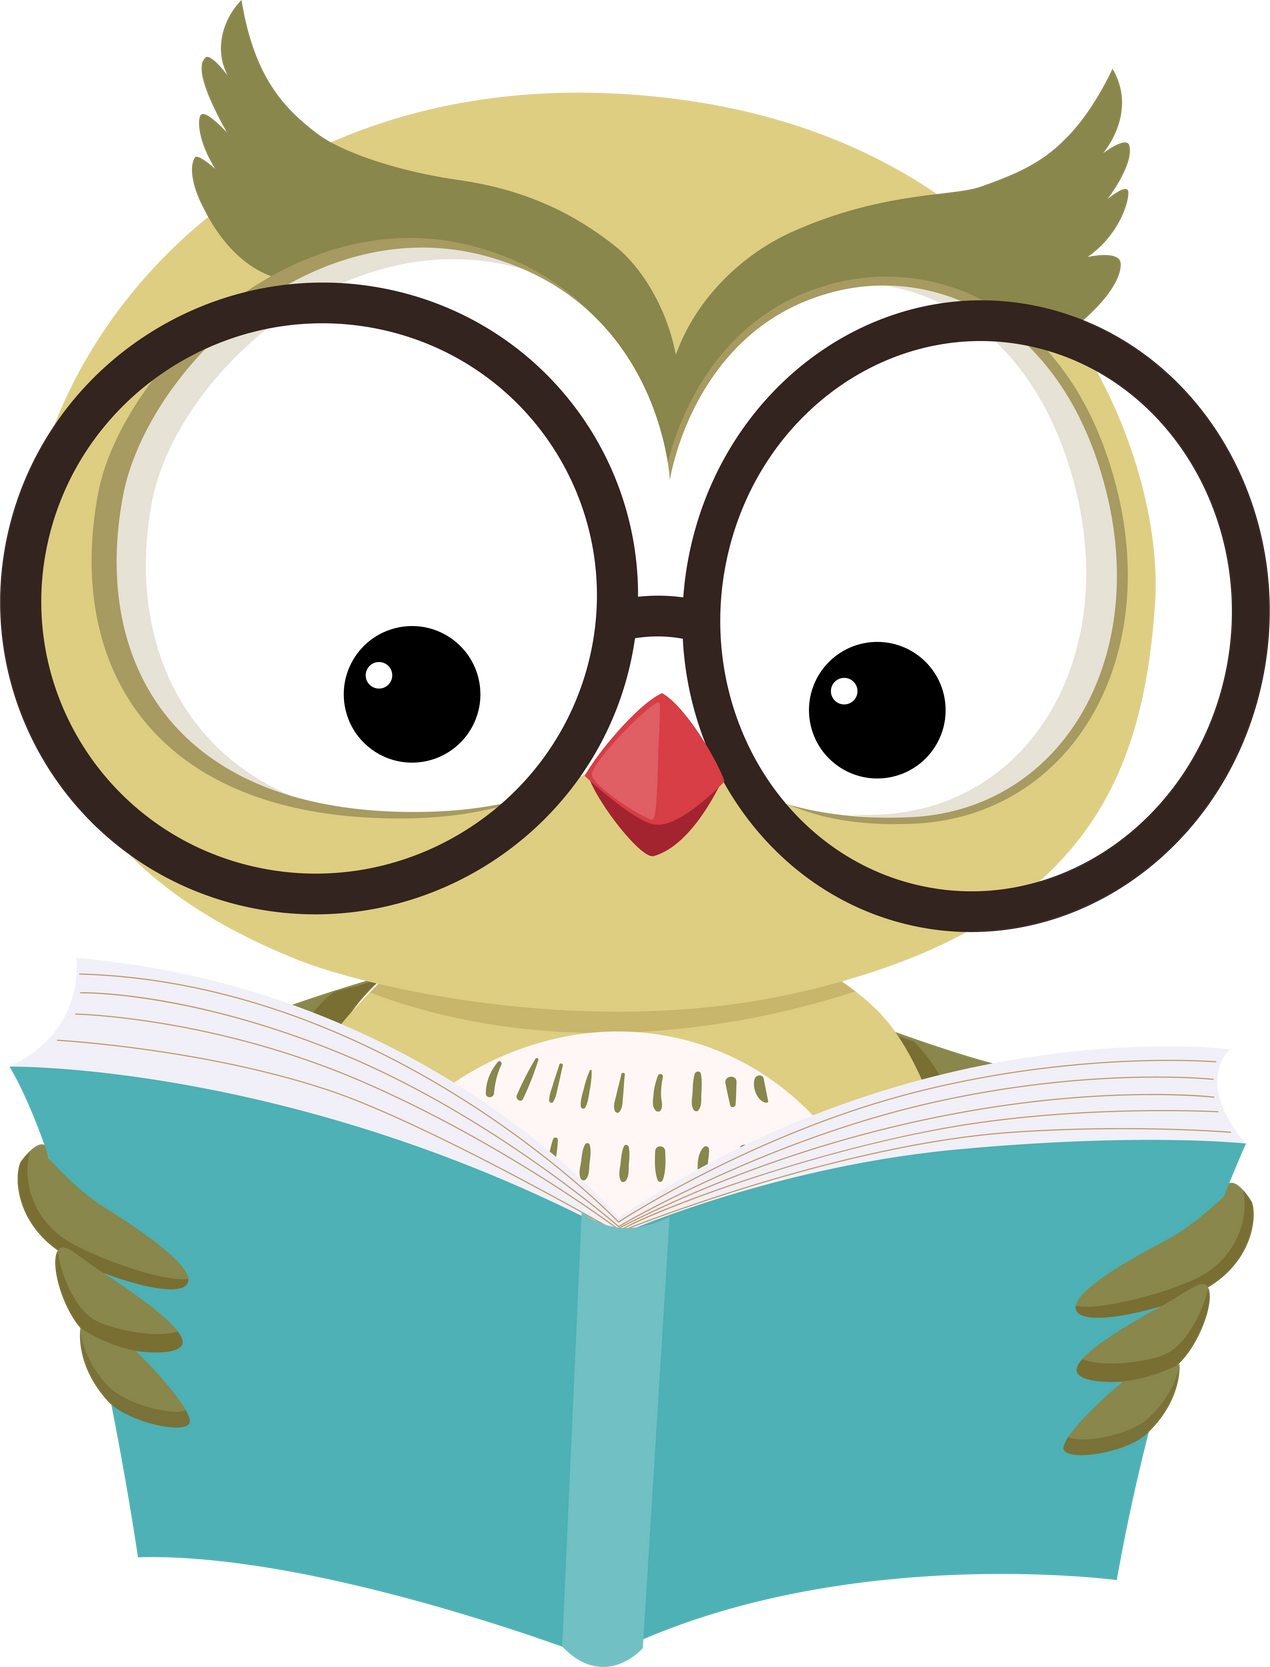  Owl Mascot Reading Book